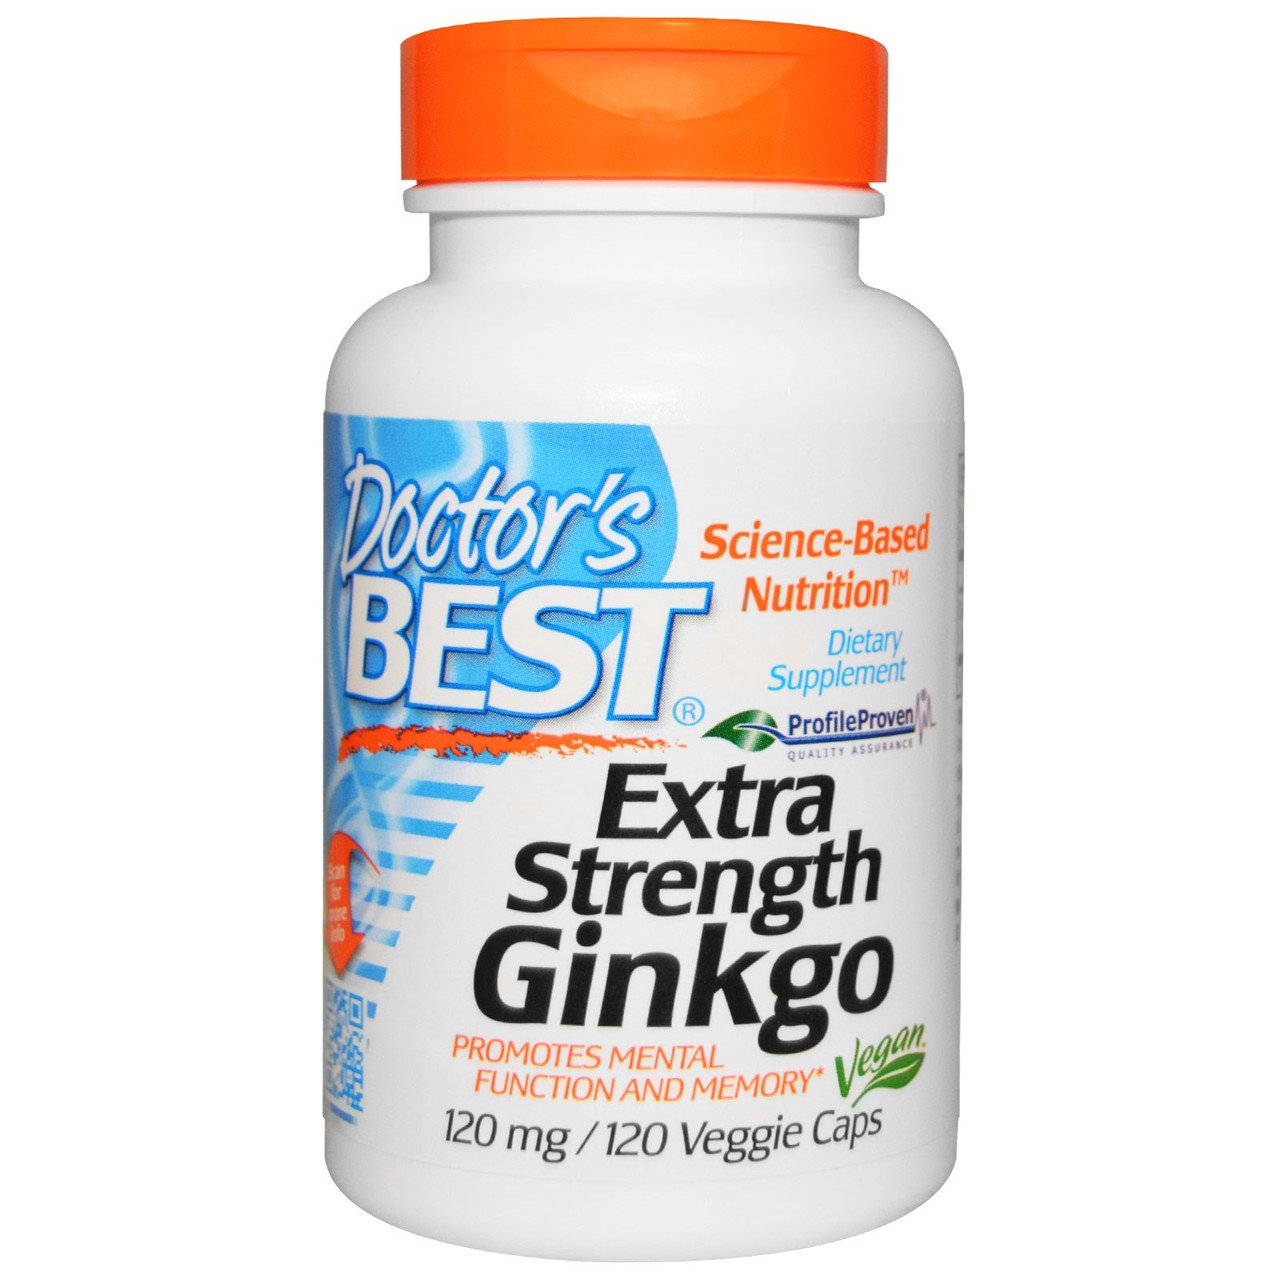 Extra Strength Ginkgo 120 mg Doctor's Best 120 Veggie Caps,  мл, Doctor's BEST. Спец препараты. 